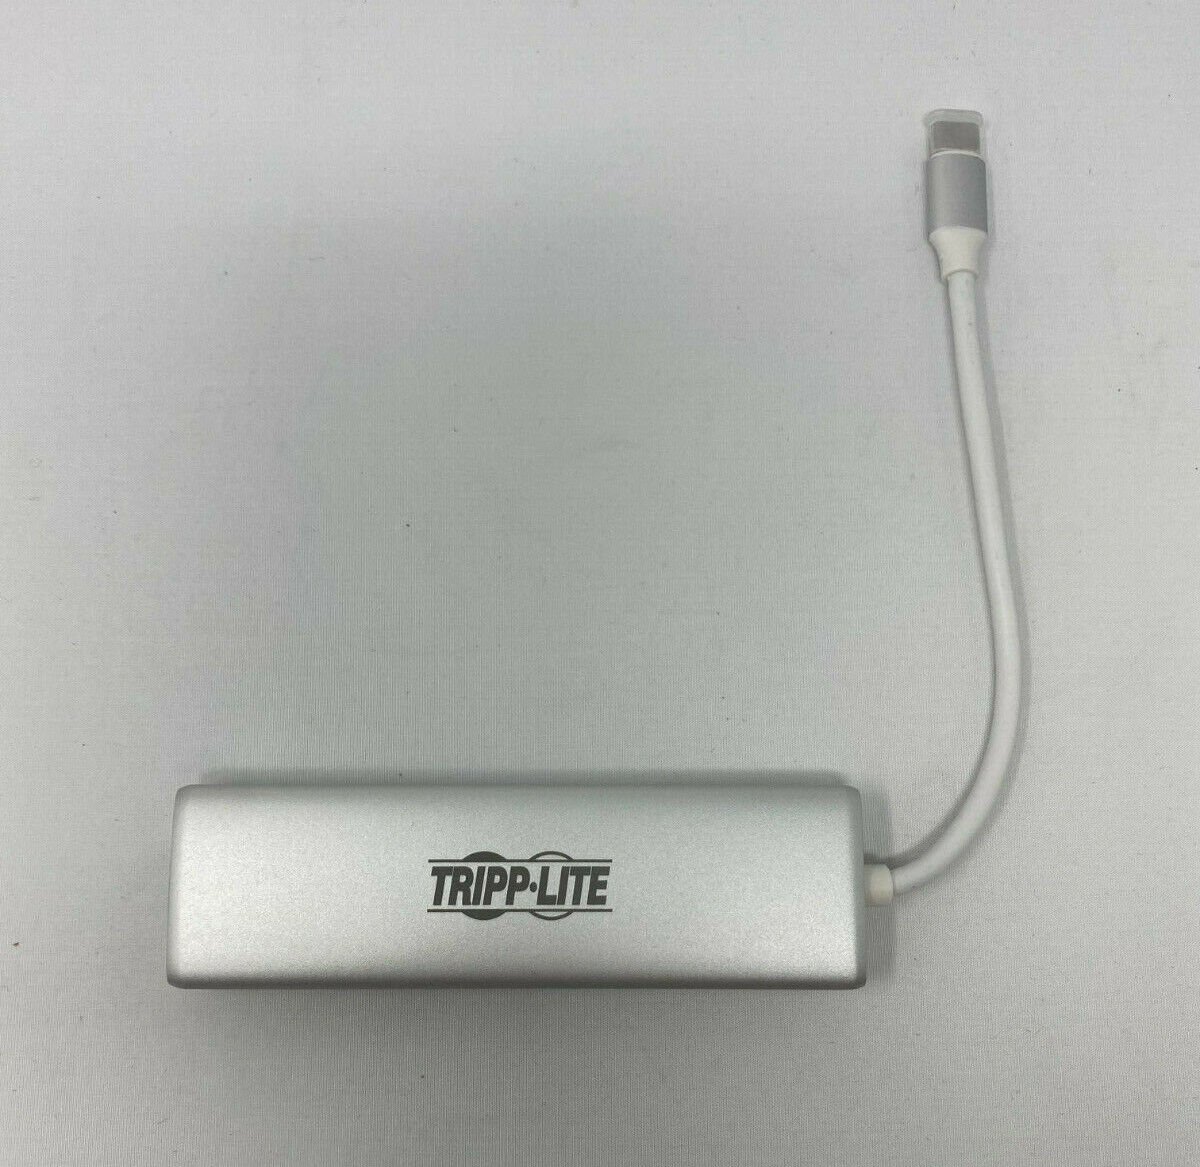 Tripp-Lite USB 3.1 Gen1 USB-C Aluminum Dock with PD charging Model:U442-DOCK10-S